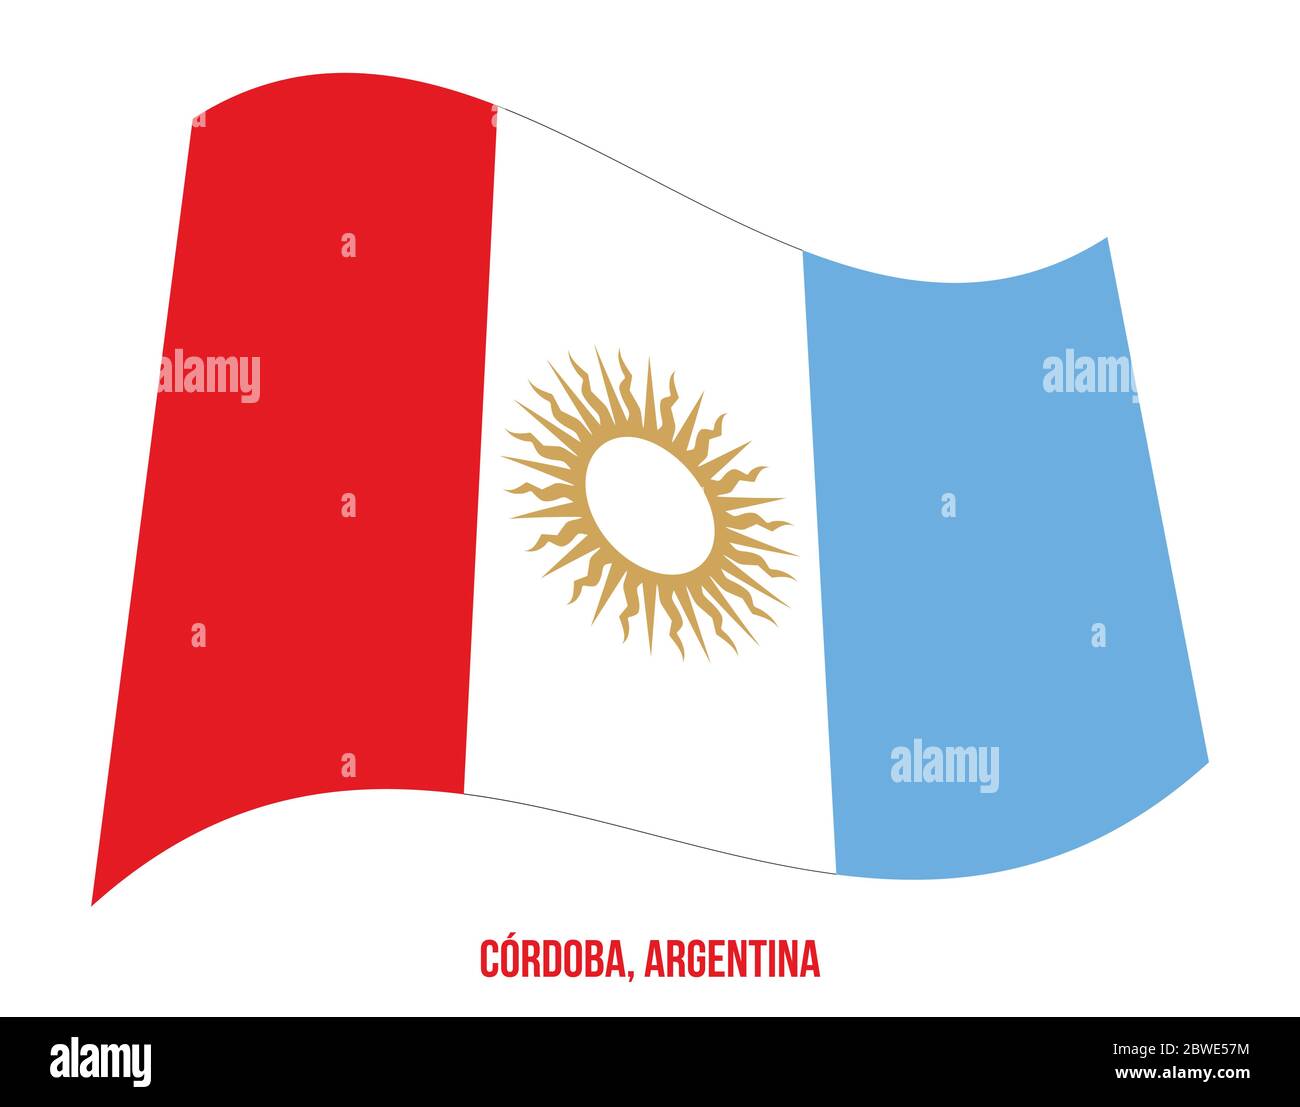 Cordoba Flag Waving Vector Illustration on White Background. Flag of Argentina Provinces. Stock Vector